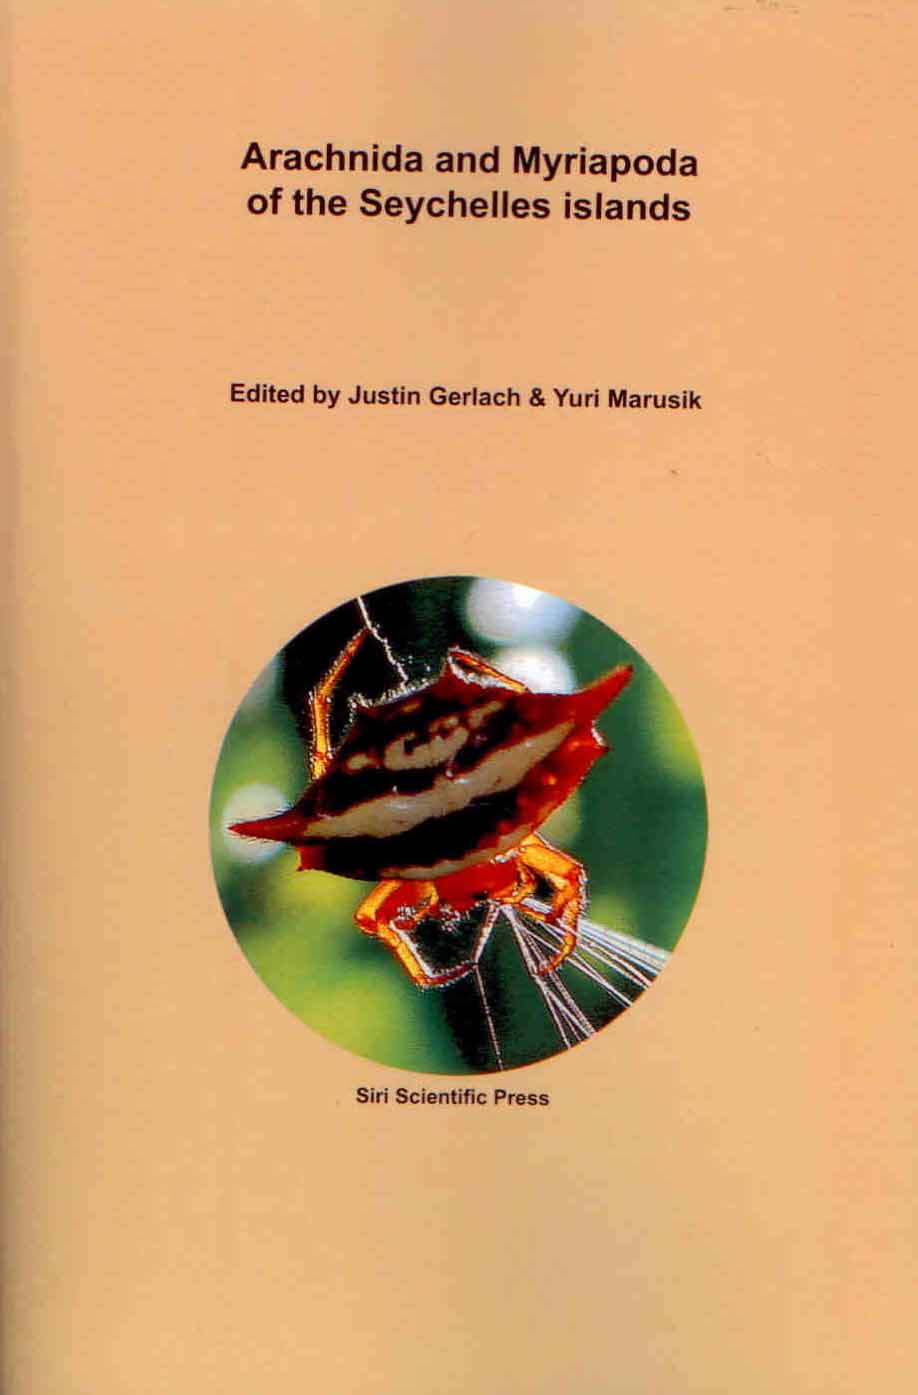 Arachnida and Myriapoda of the Seychelles Islands - Gerlach, J.; Marusik, Y. (Eds)